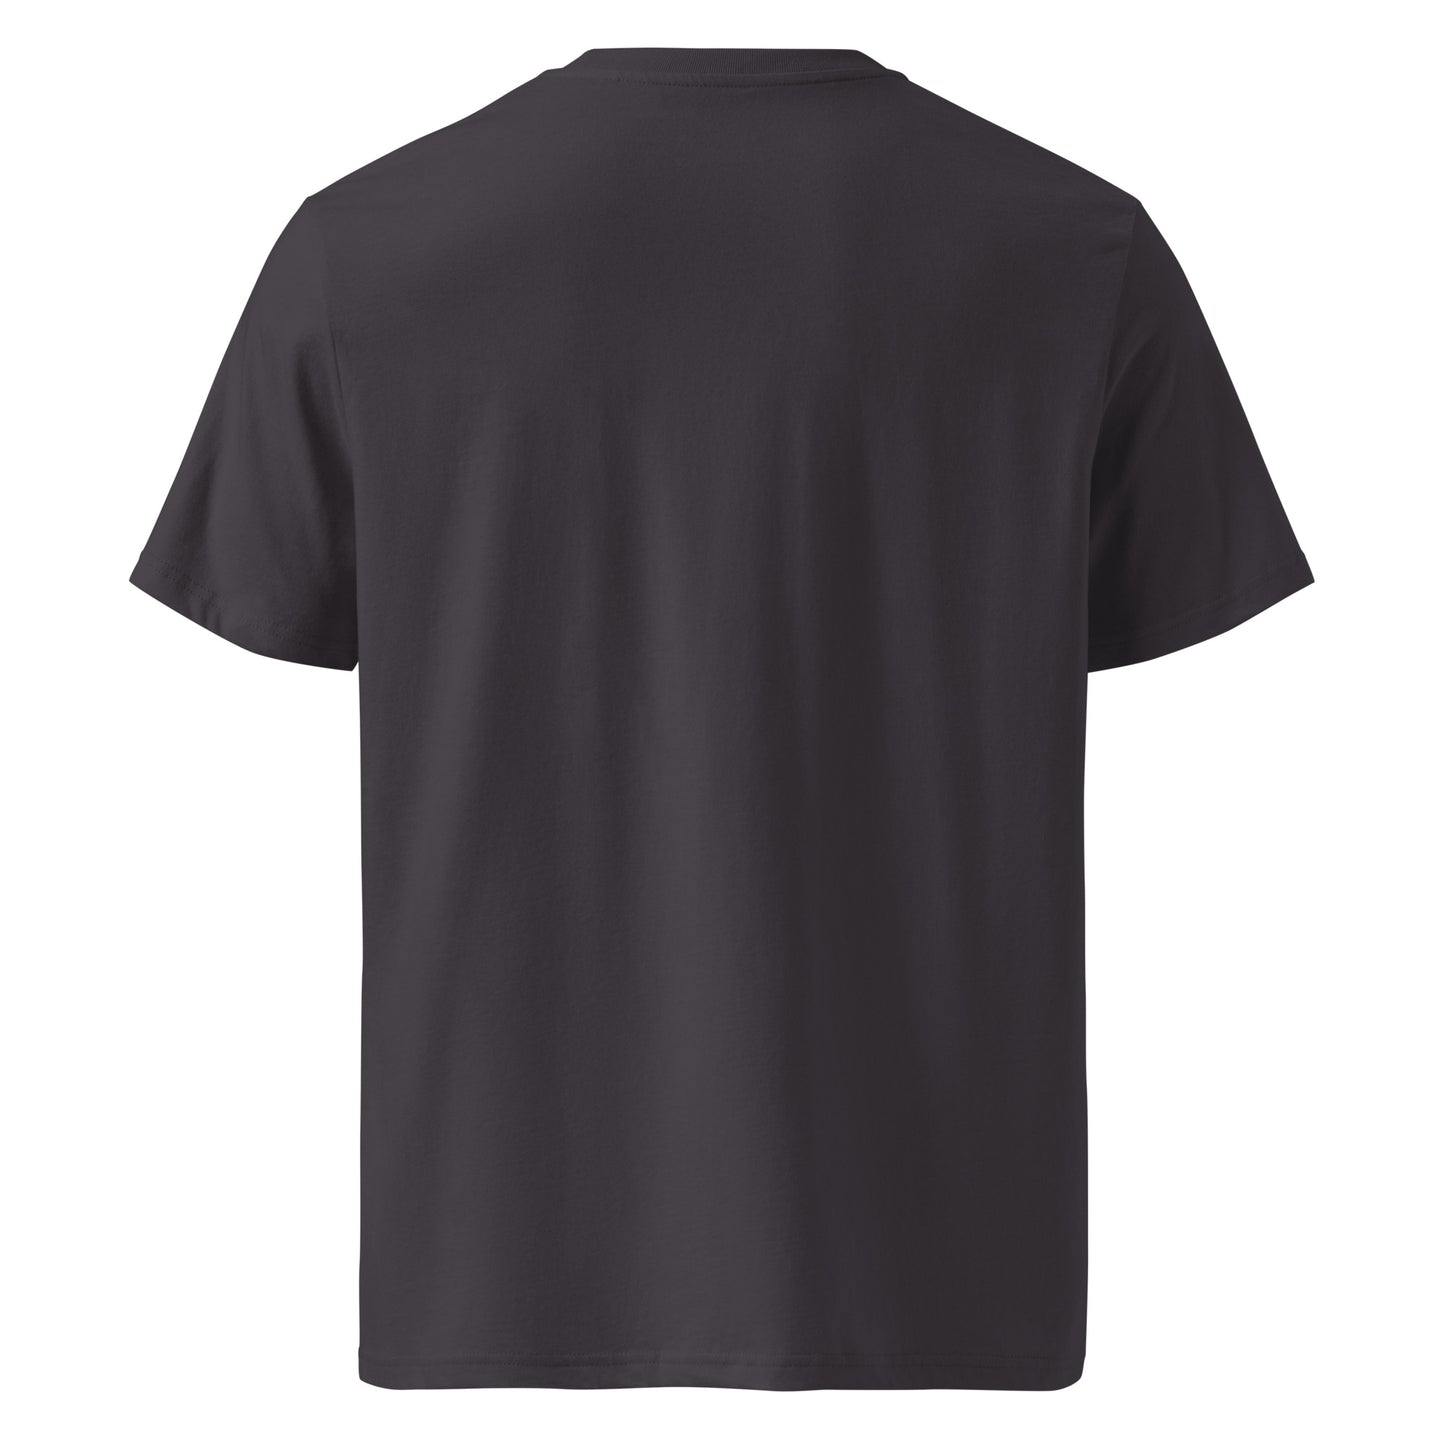 Symbolizing Patterns isn´t for the Weak Bio-Baumwoll-T-Shirt